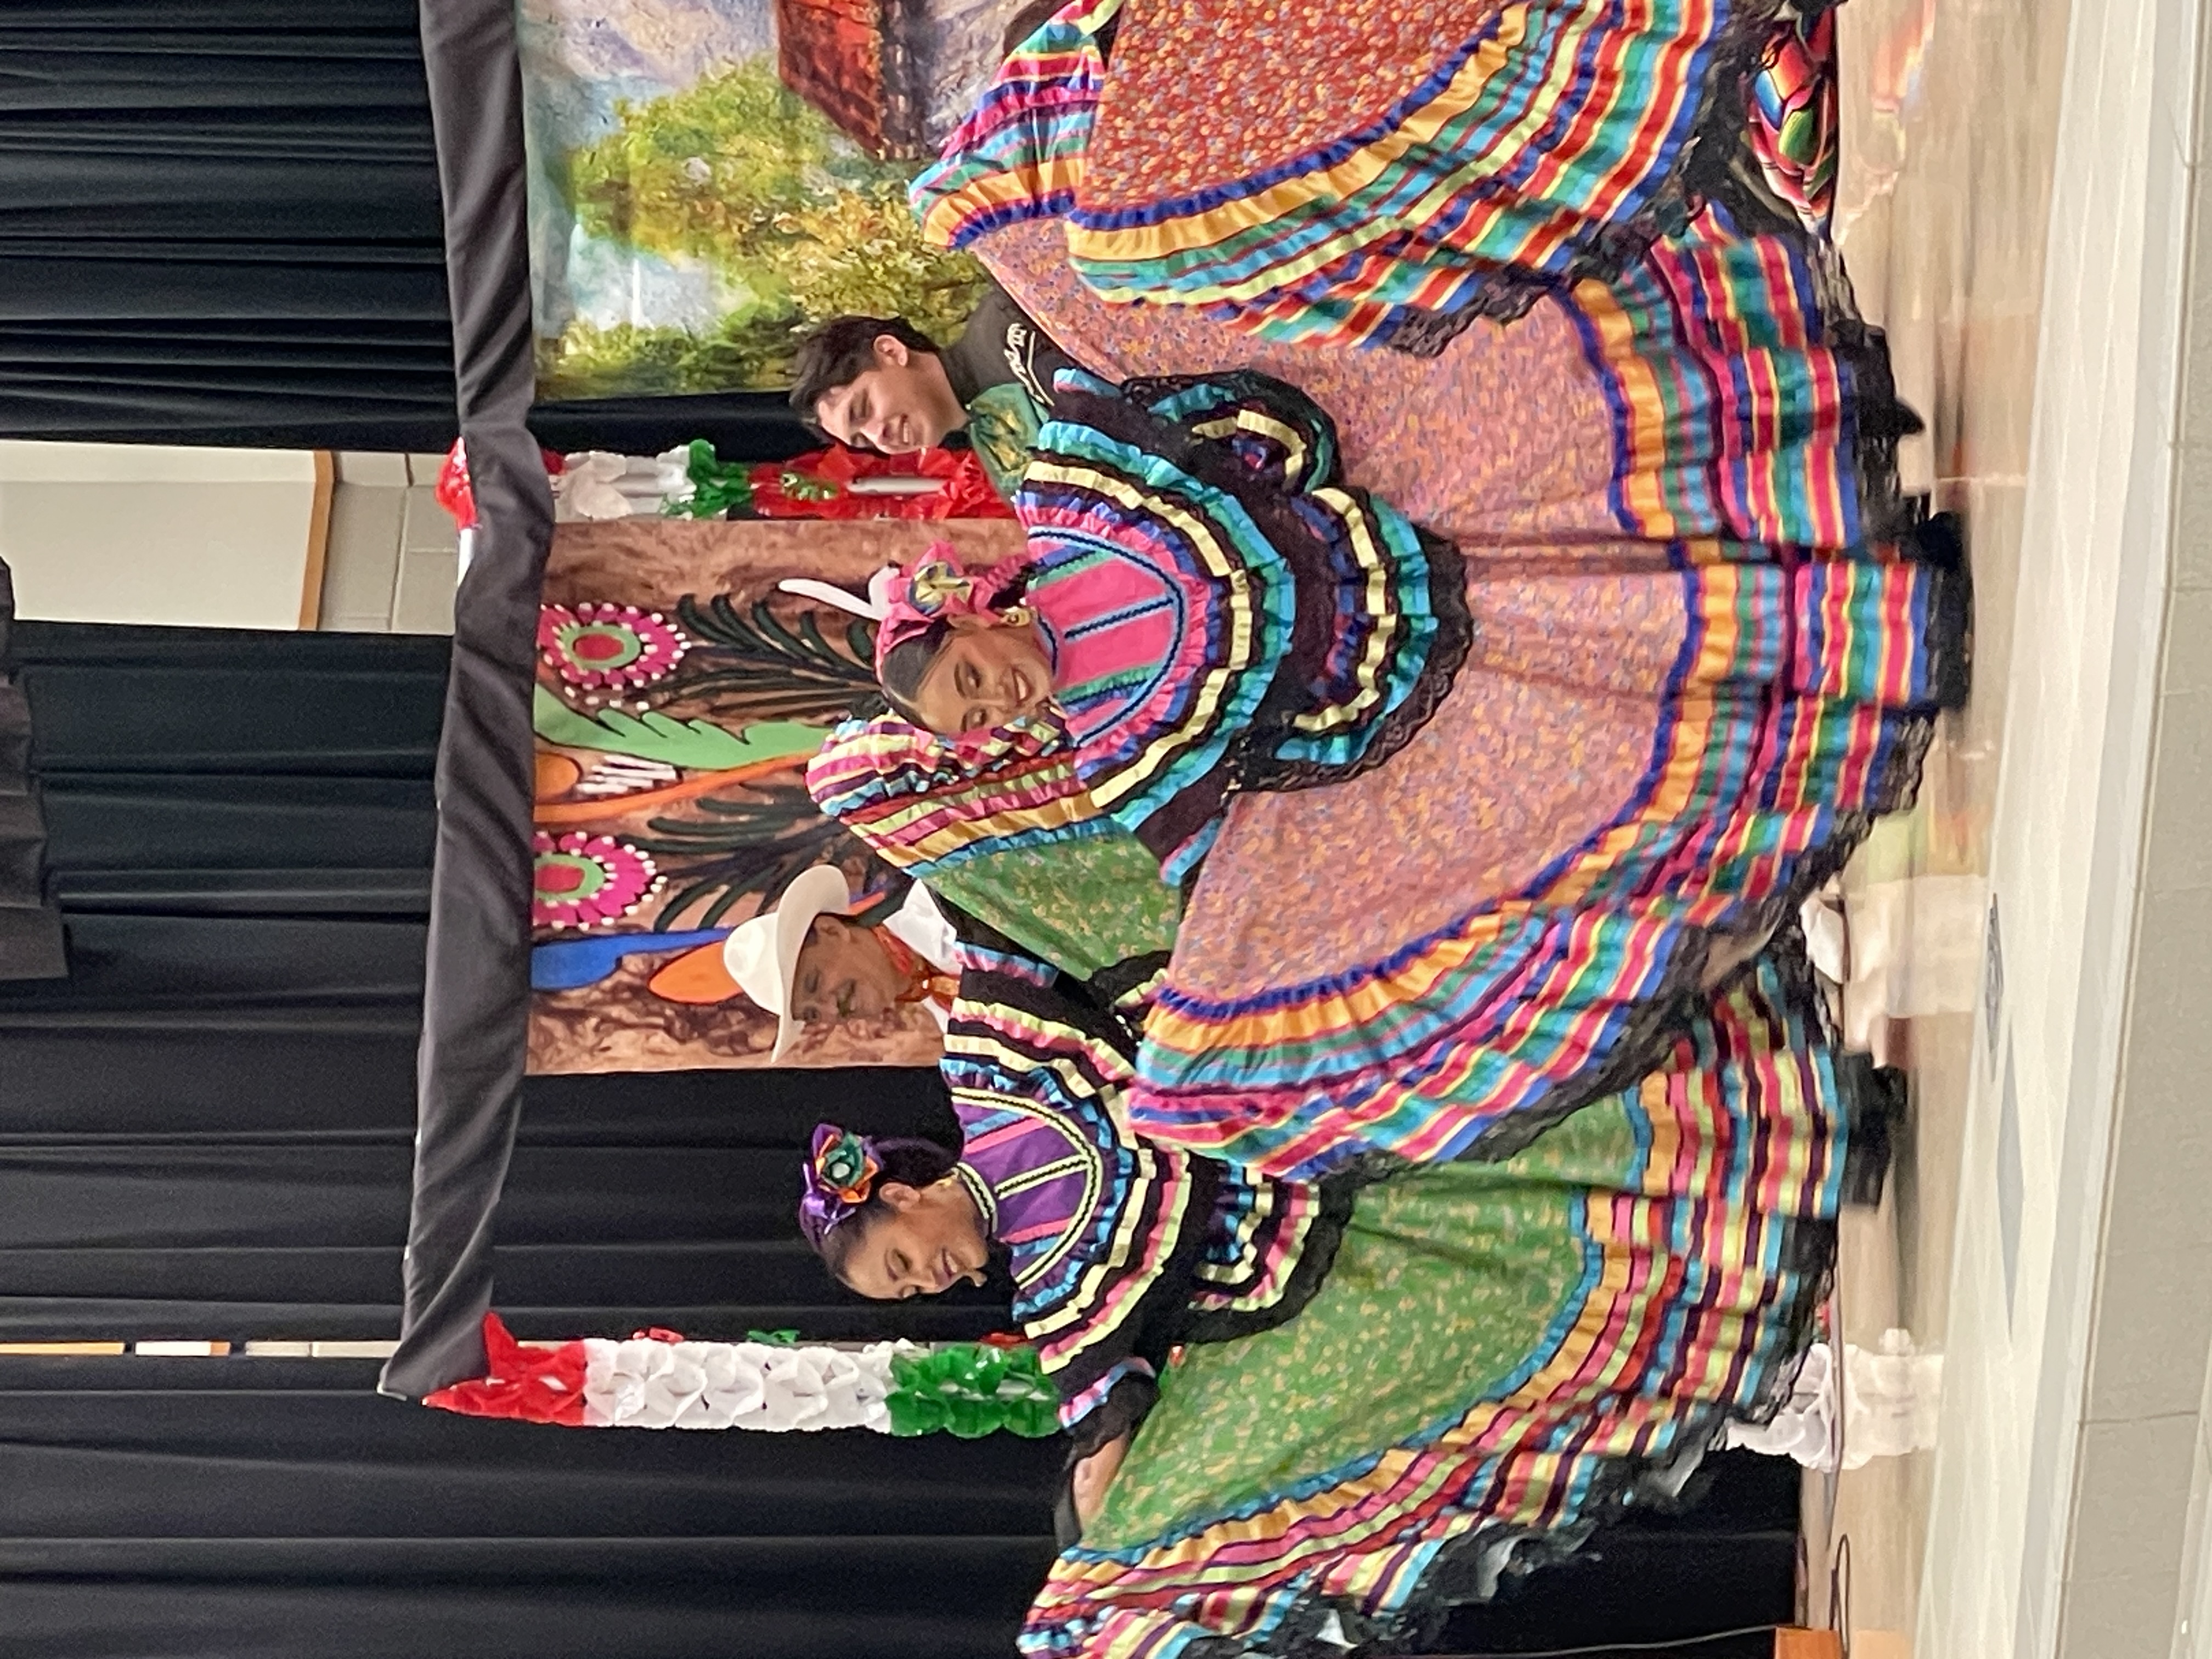 dancers wearing traditional Hispanic attire